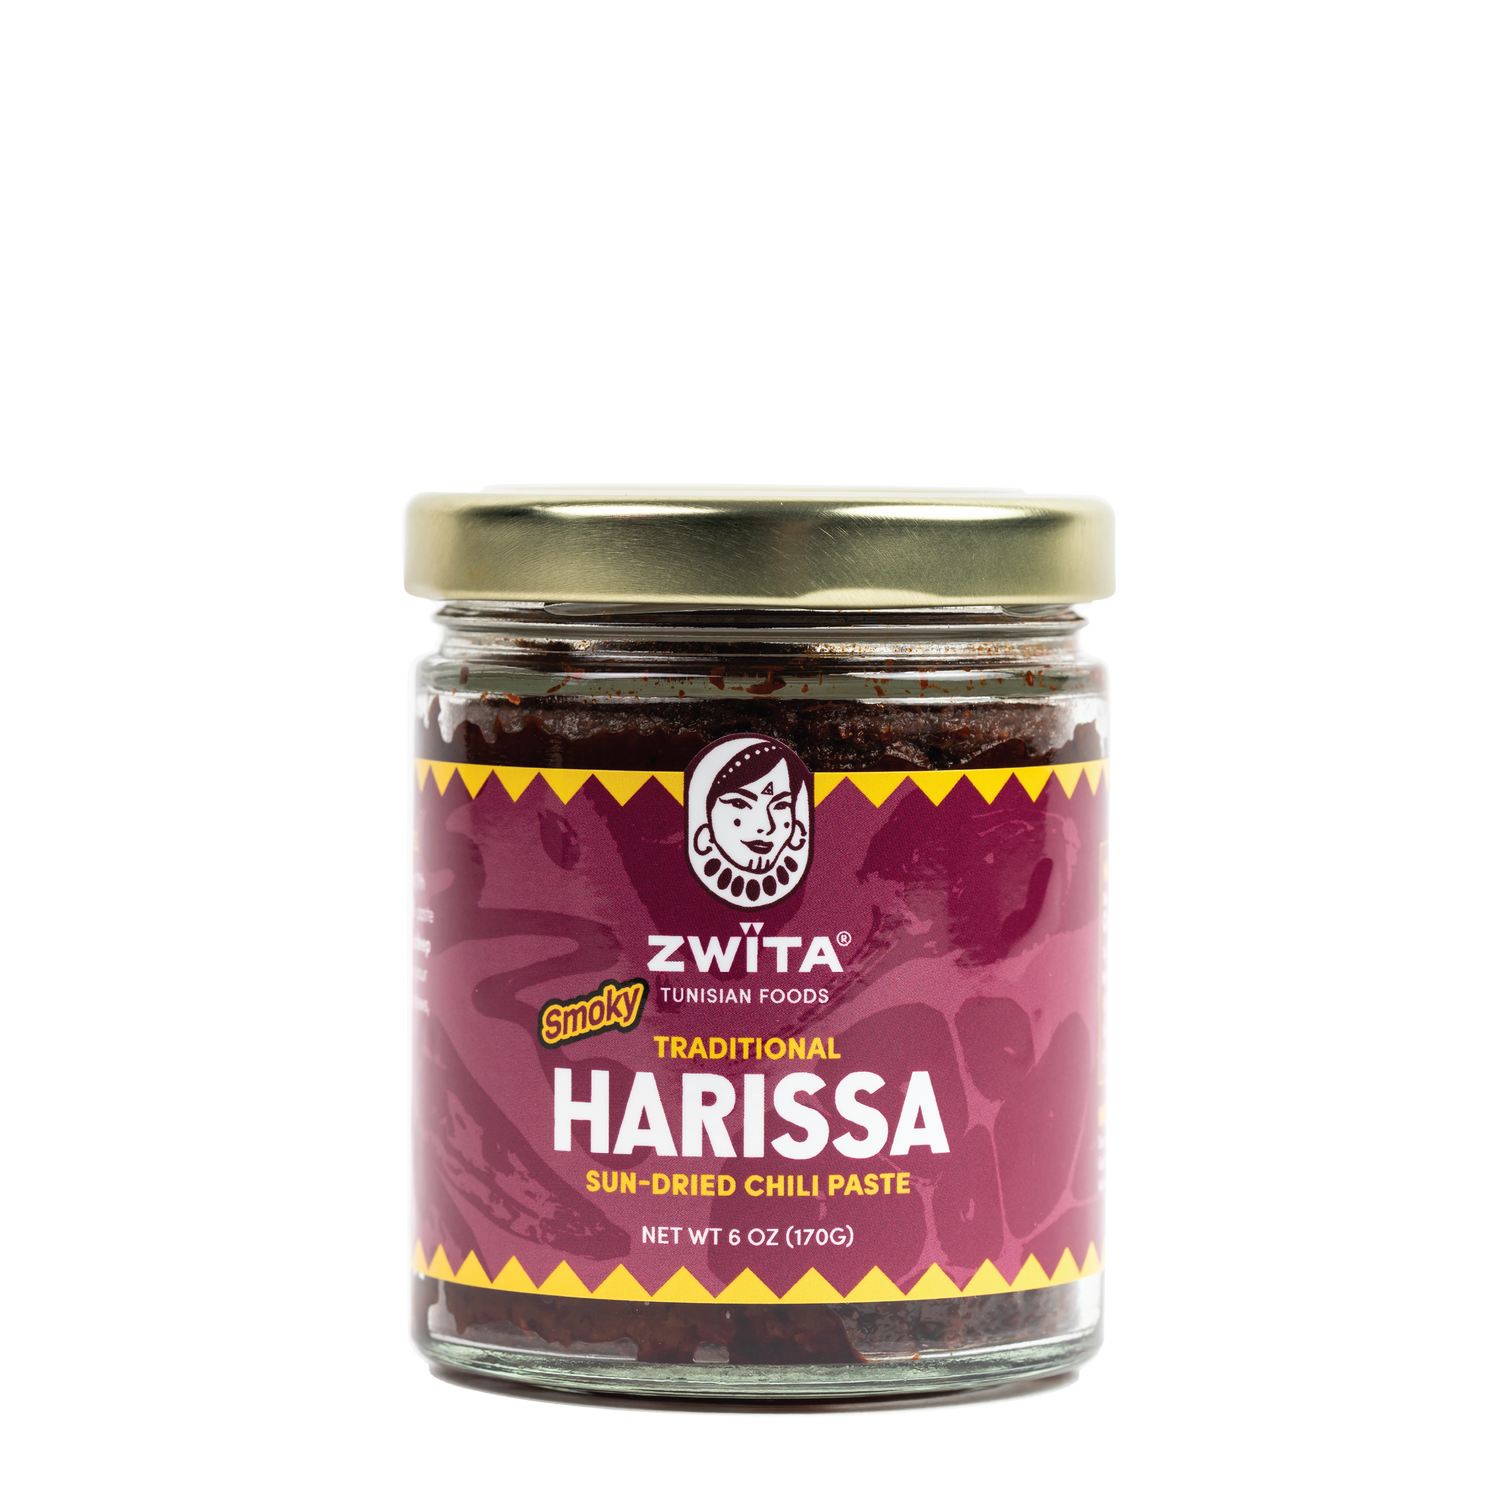 Zwita Smoky Traditional Harissa Sauce, 6 oz